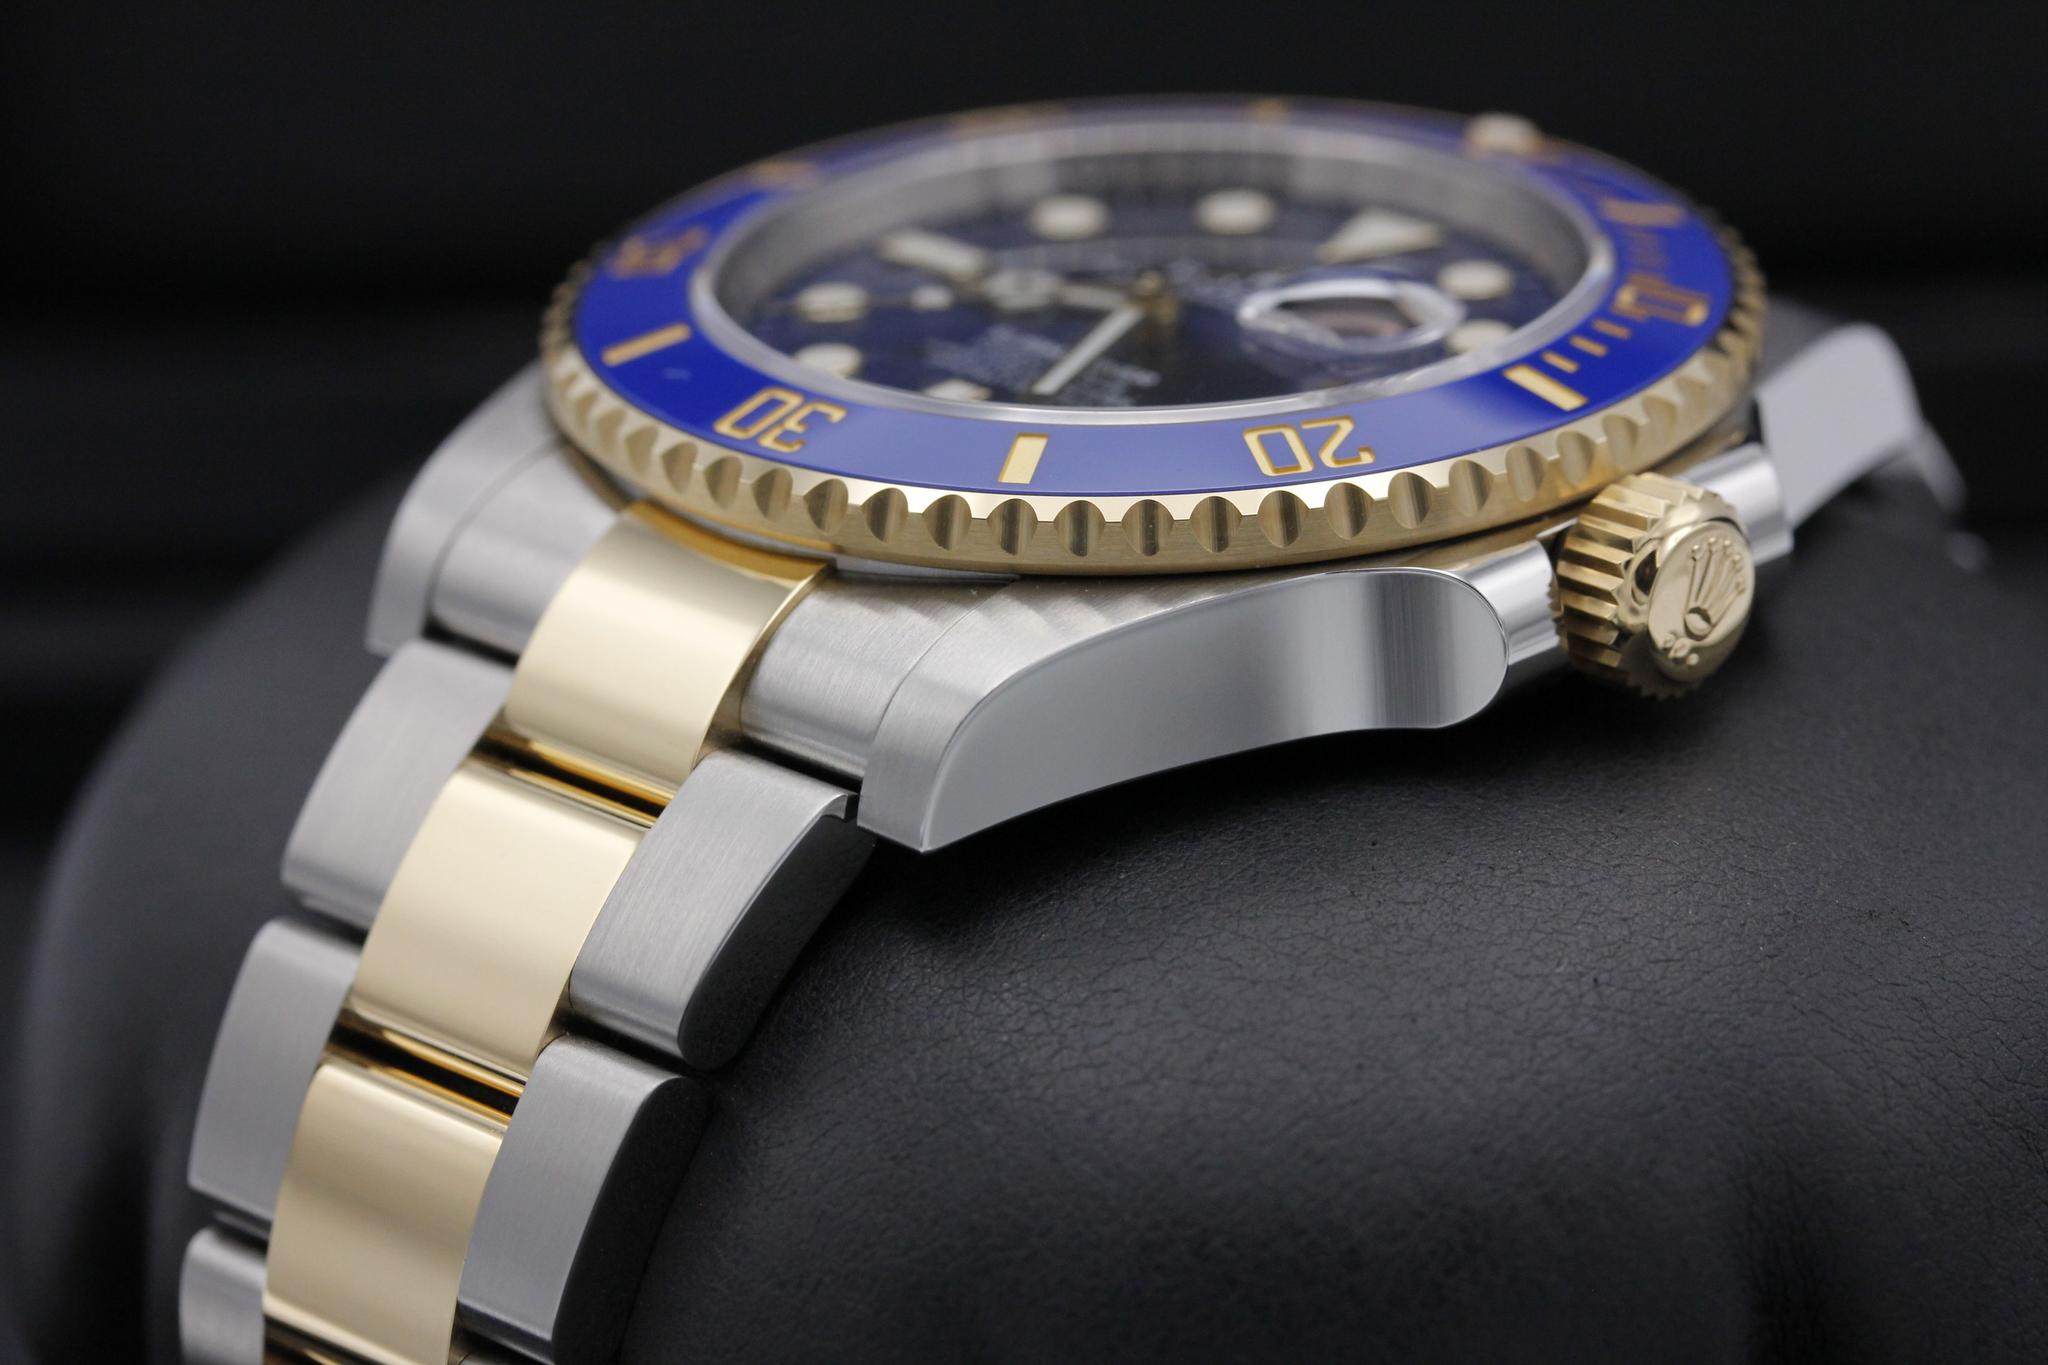 Rolex Submariner Replica 126613LB 2 Tone Blue Watches